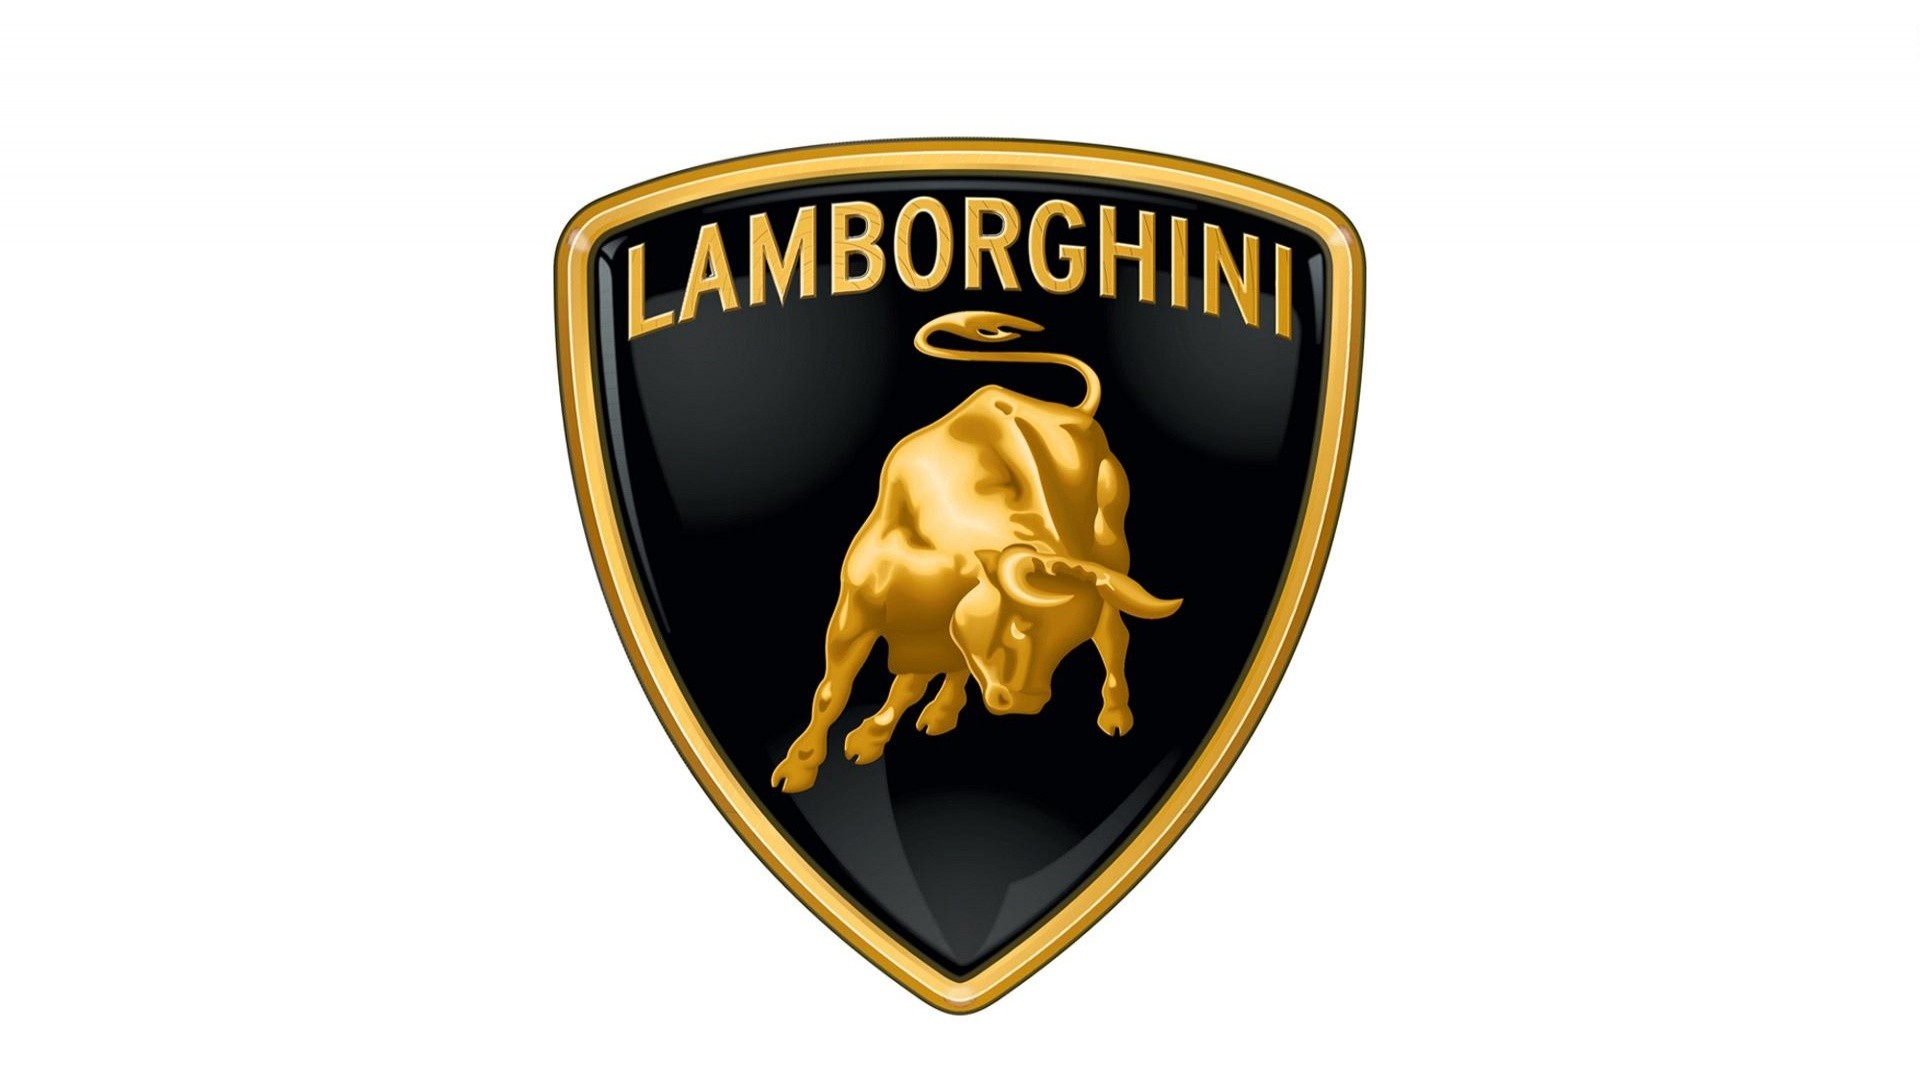 Gold And Black Lamborghini Wallpaper 2 Free Hd Wallpaper